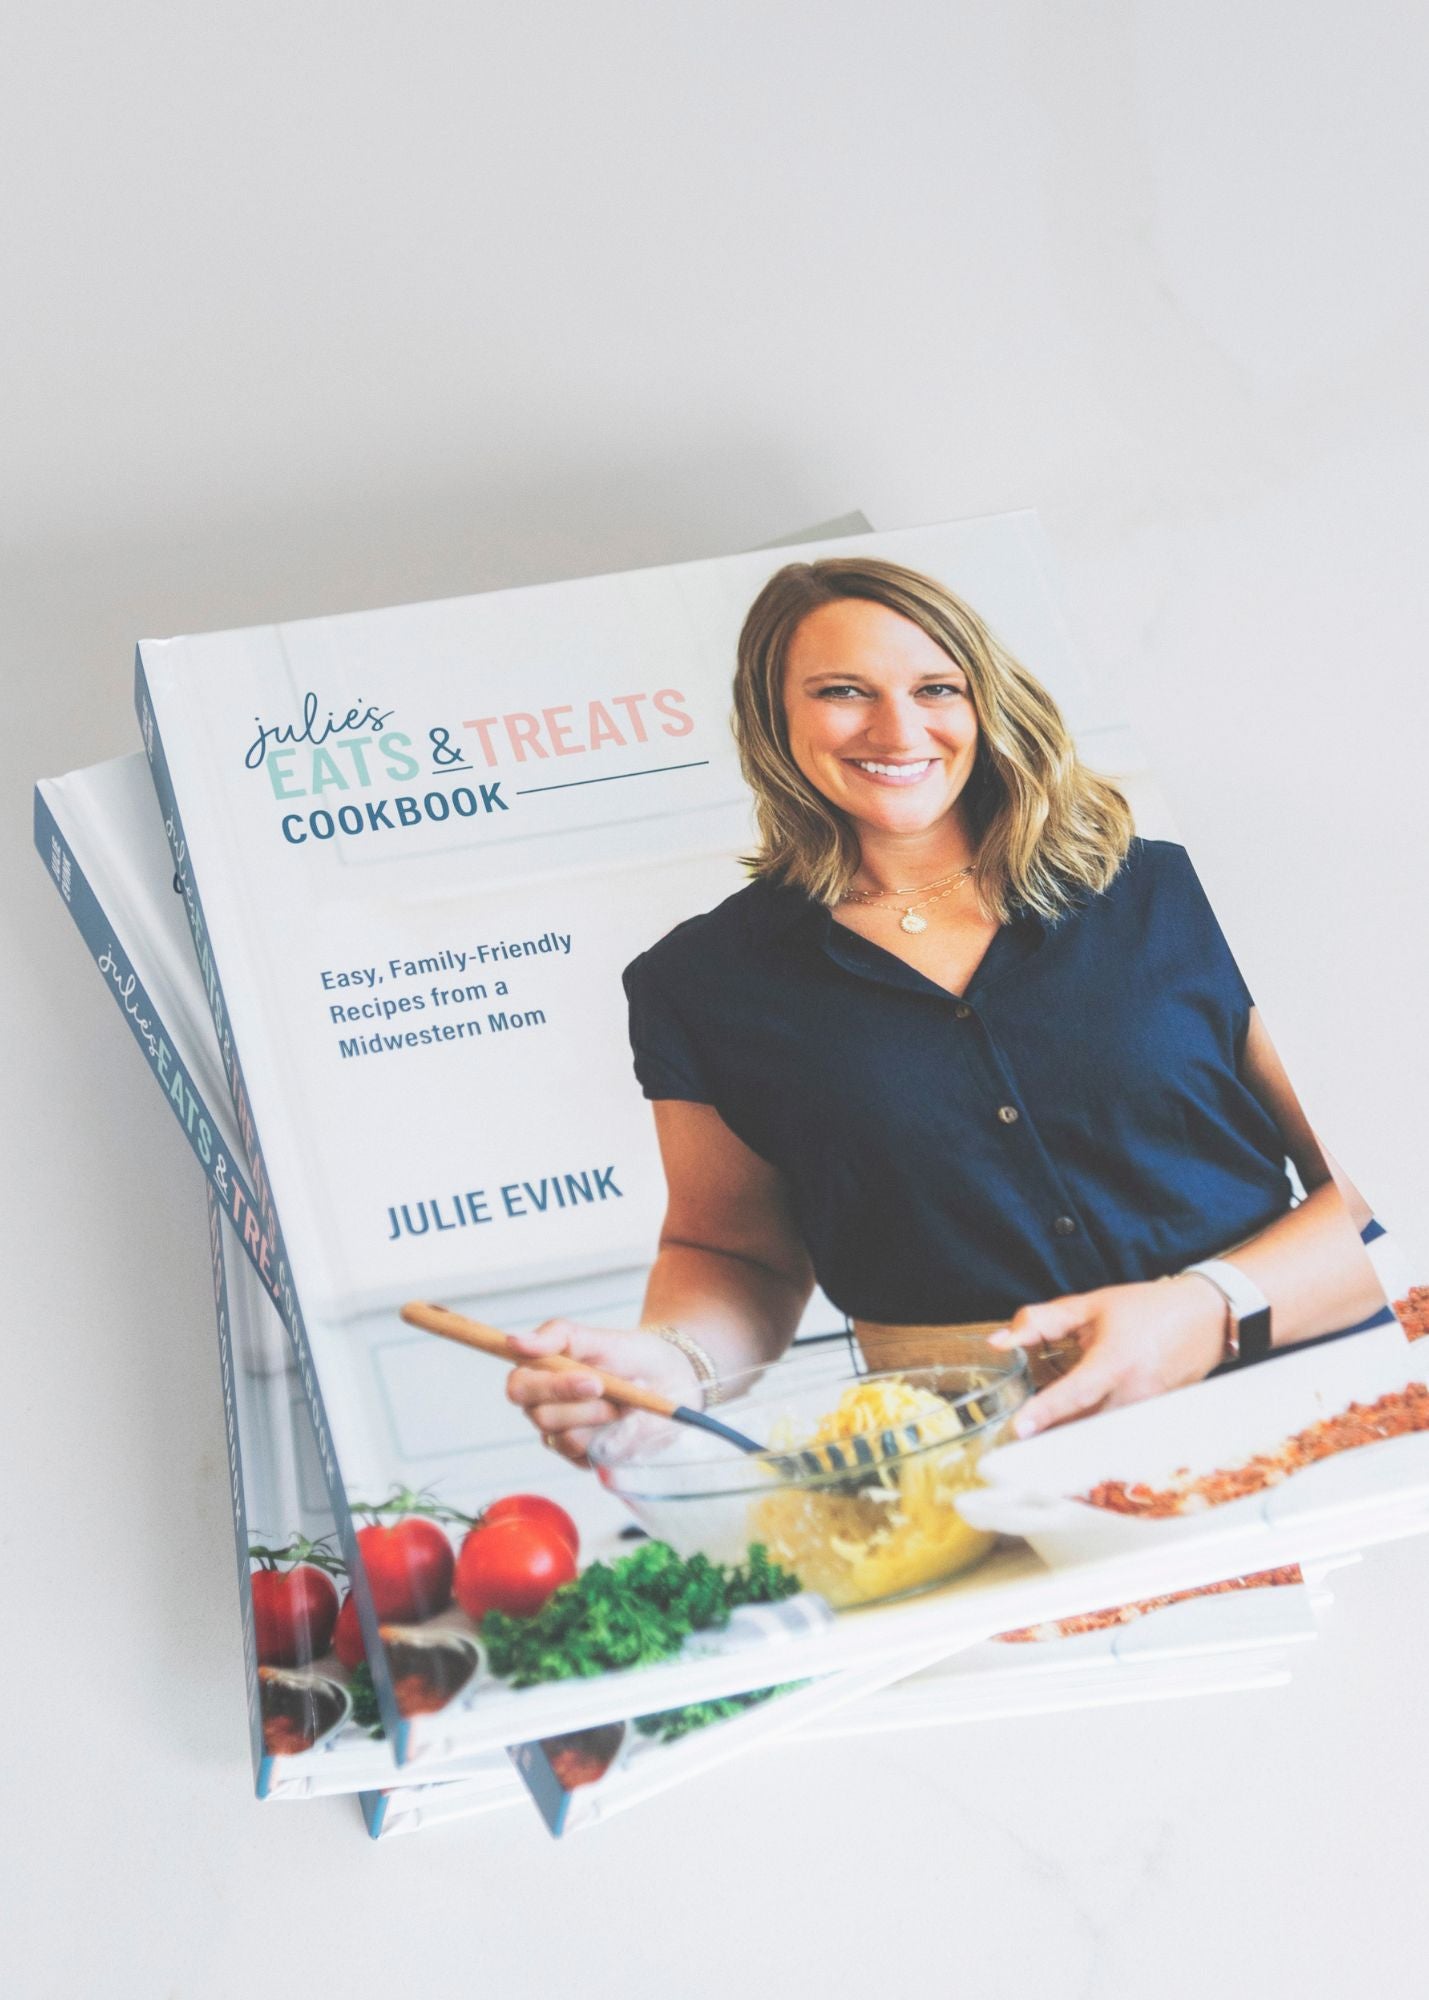 Julie's Eats & Treats Cookbook Gifts